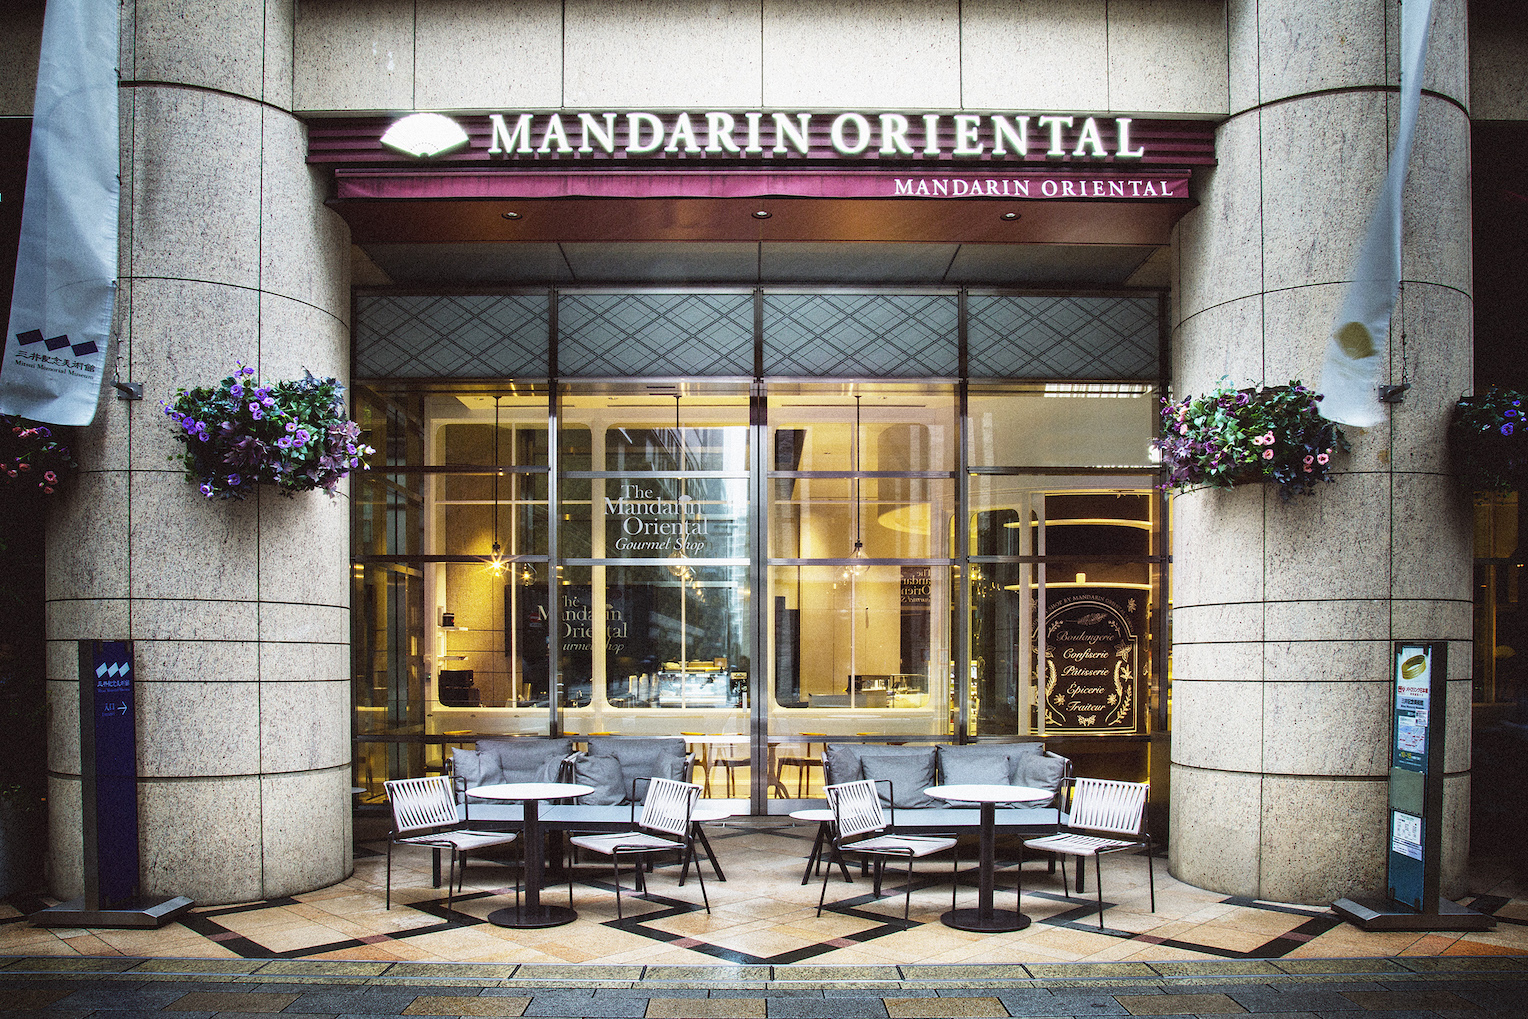 The Mandarin Oriental Gourmet Shop 2